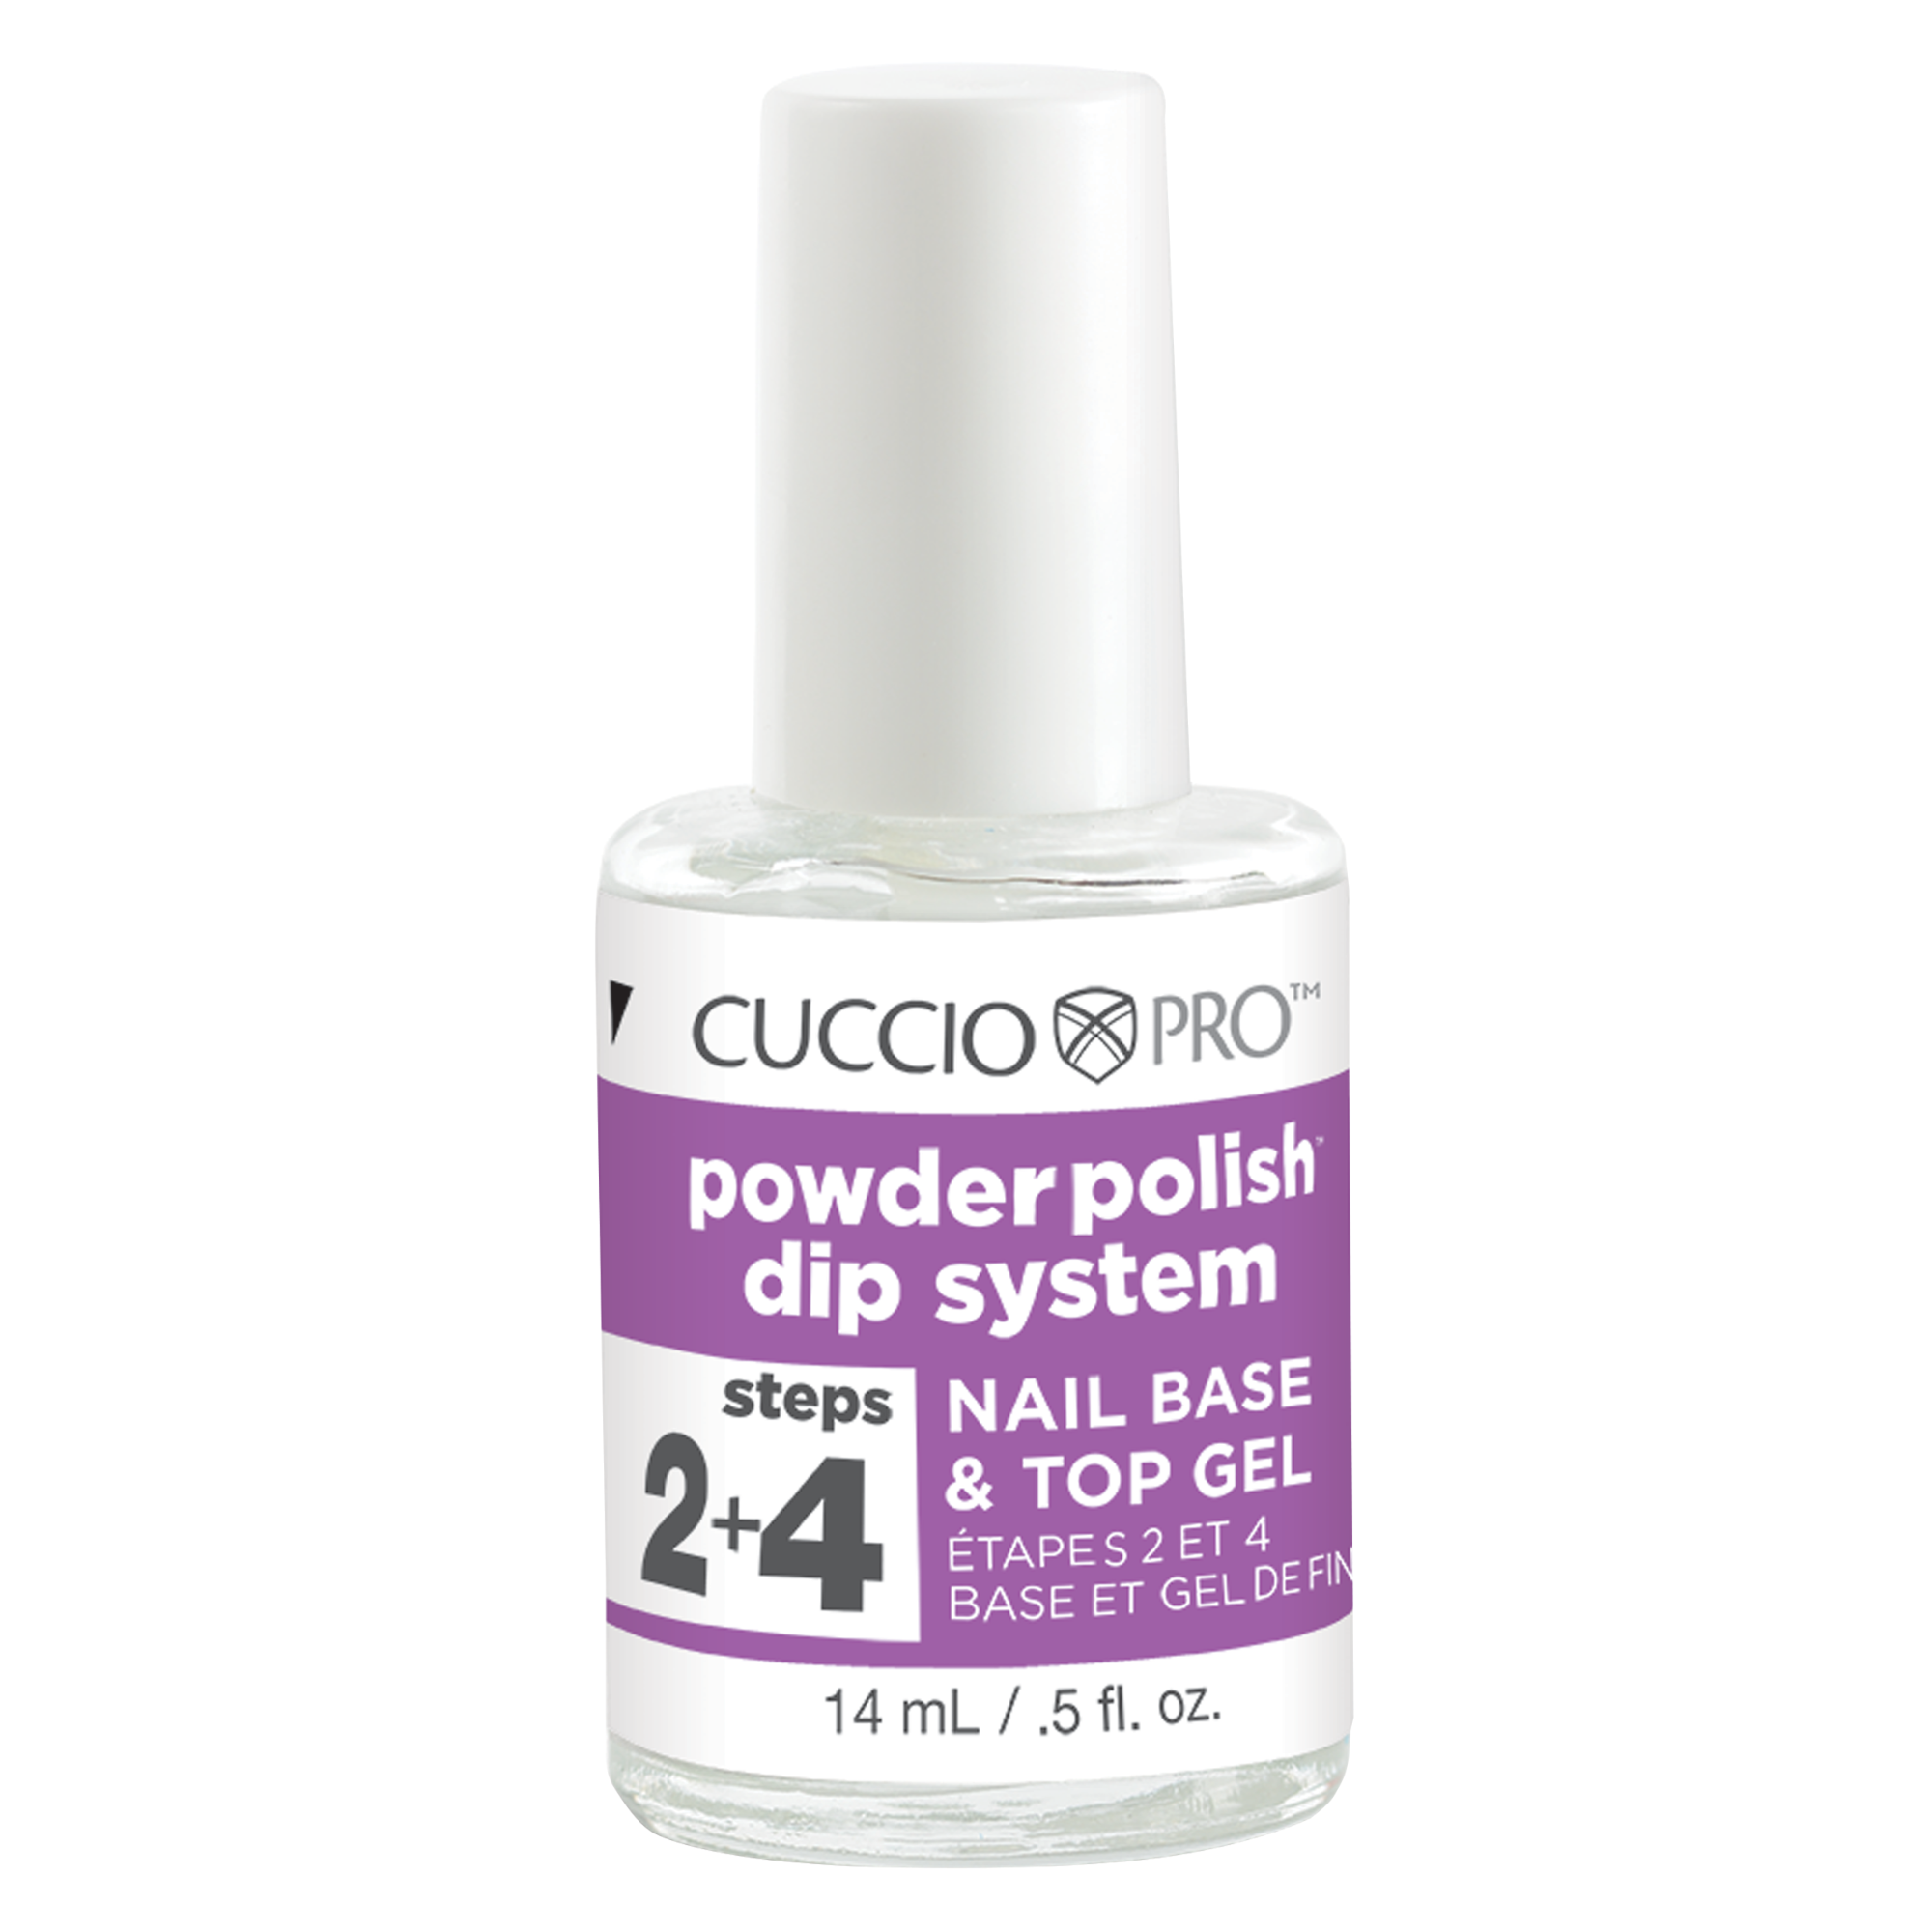 Powder Polish Dip System Nail Base  Top Gel